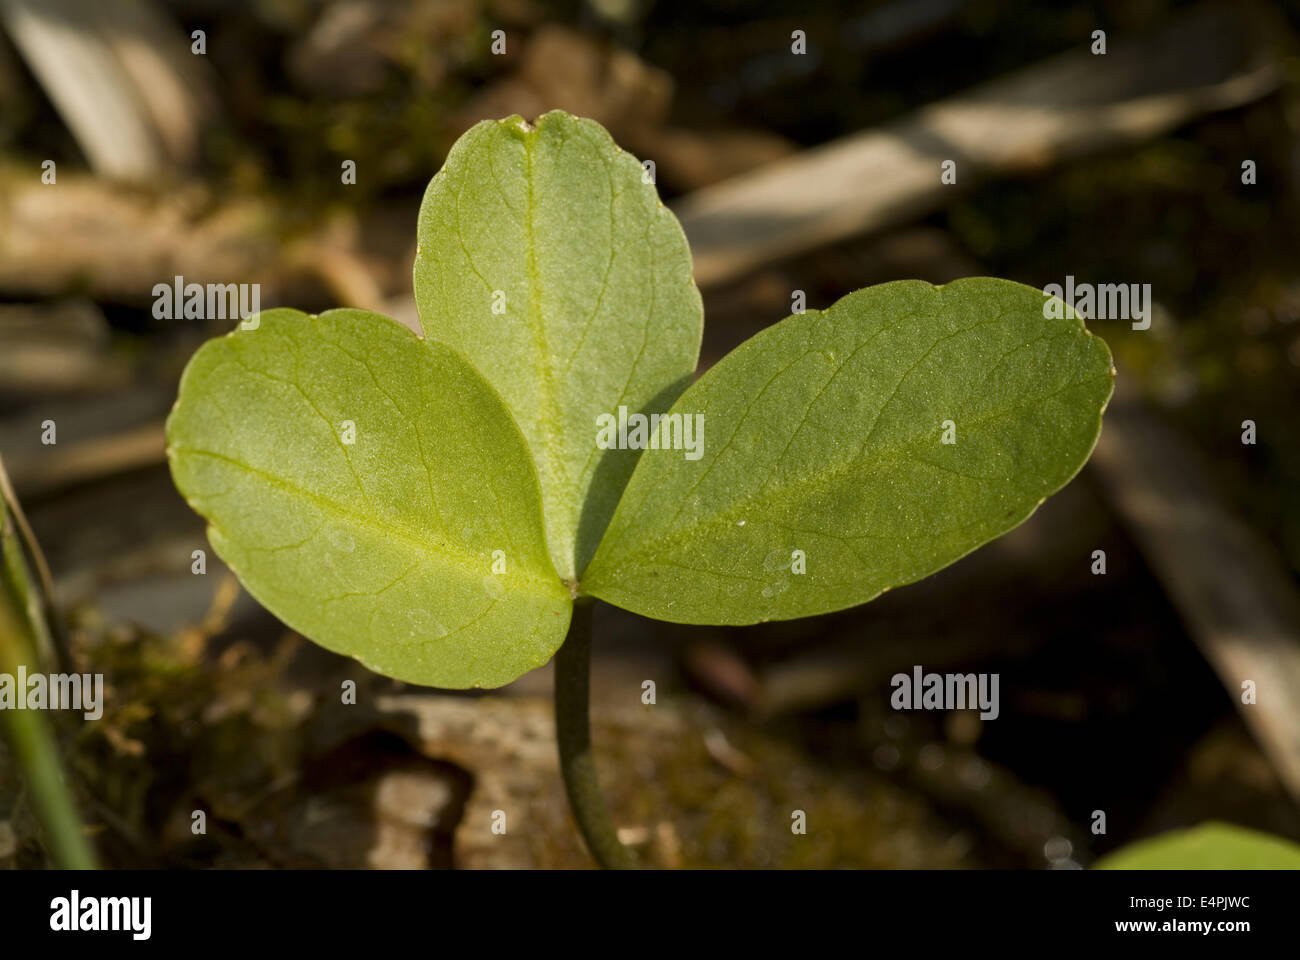 bog-bean, menyanthes trifoliata Stock Photo